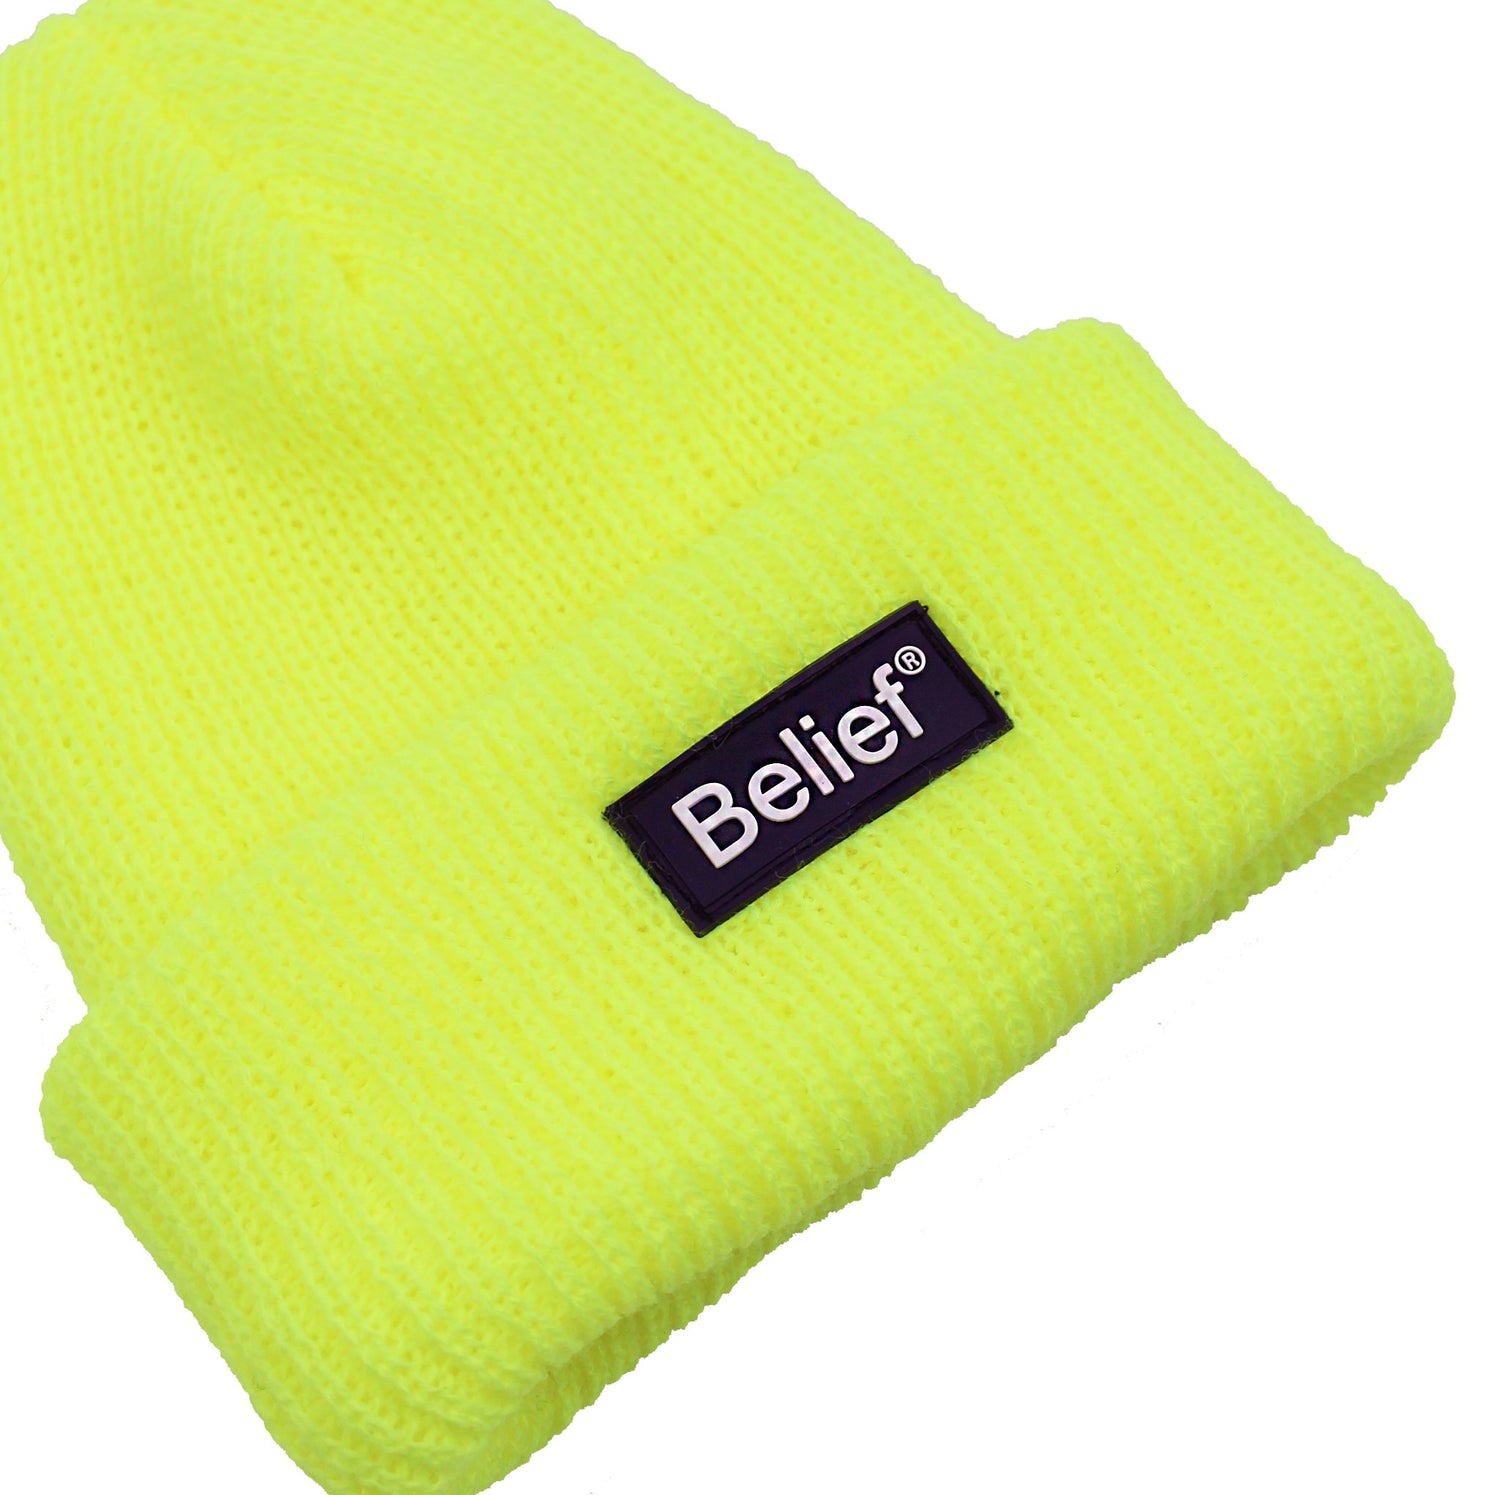 Belief NYC Neon Logo Beanie - Safety Yellow